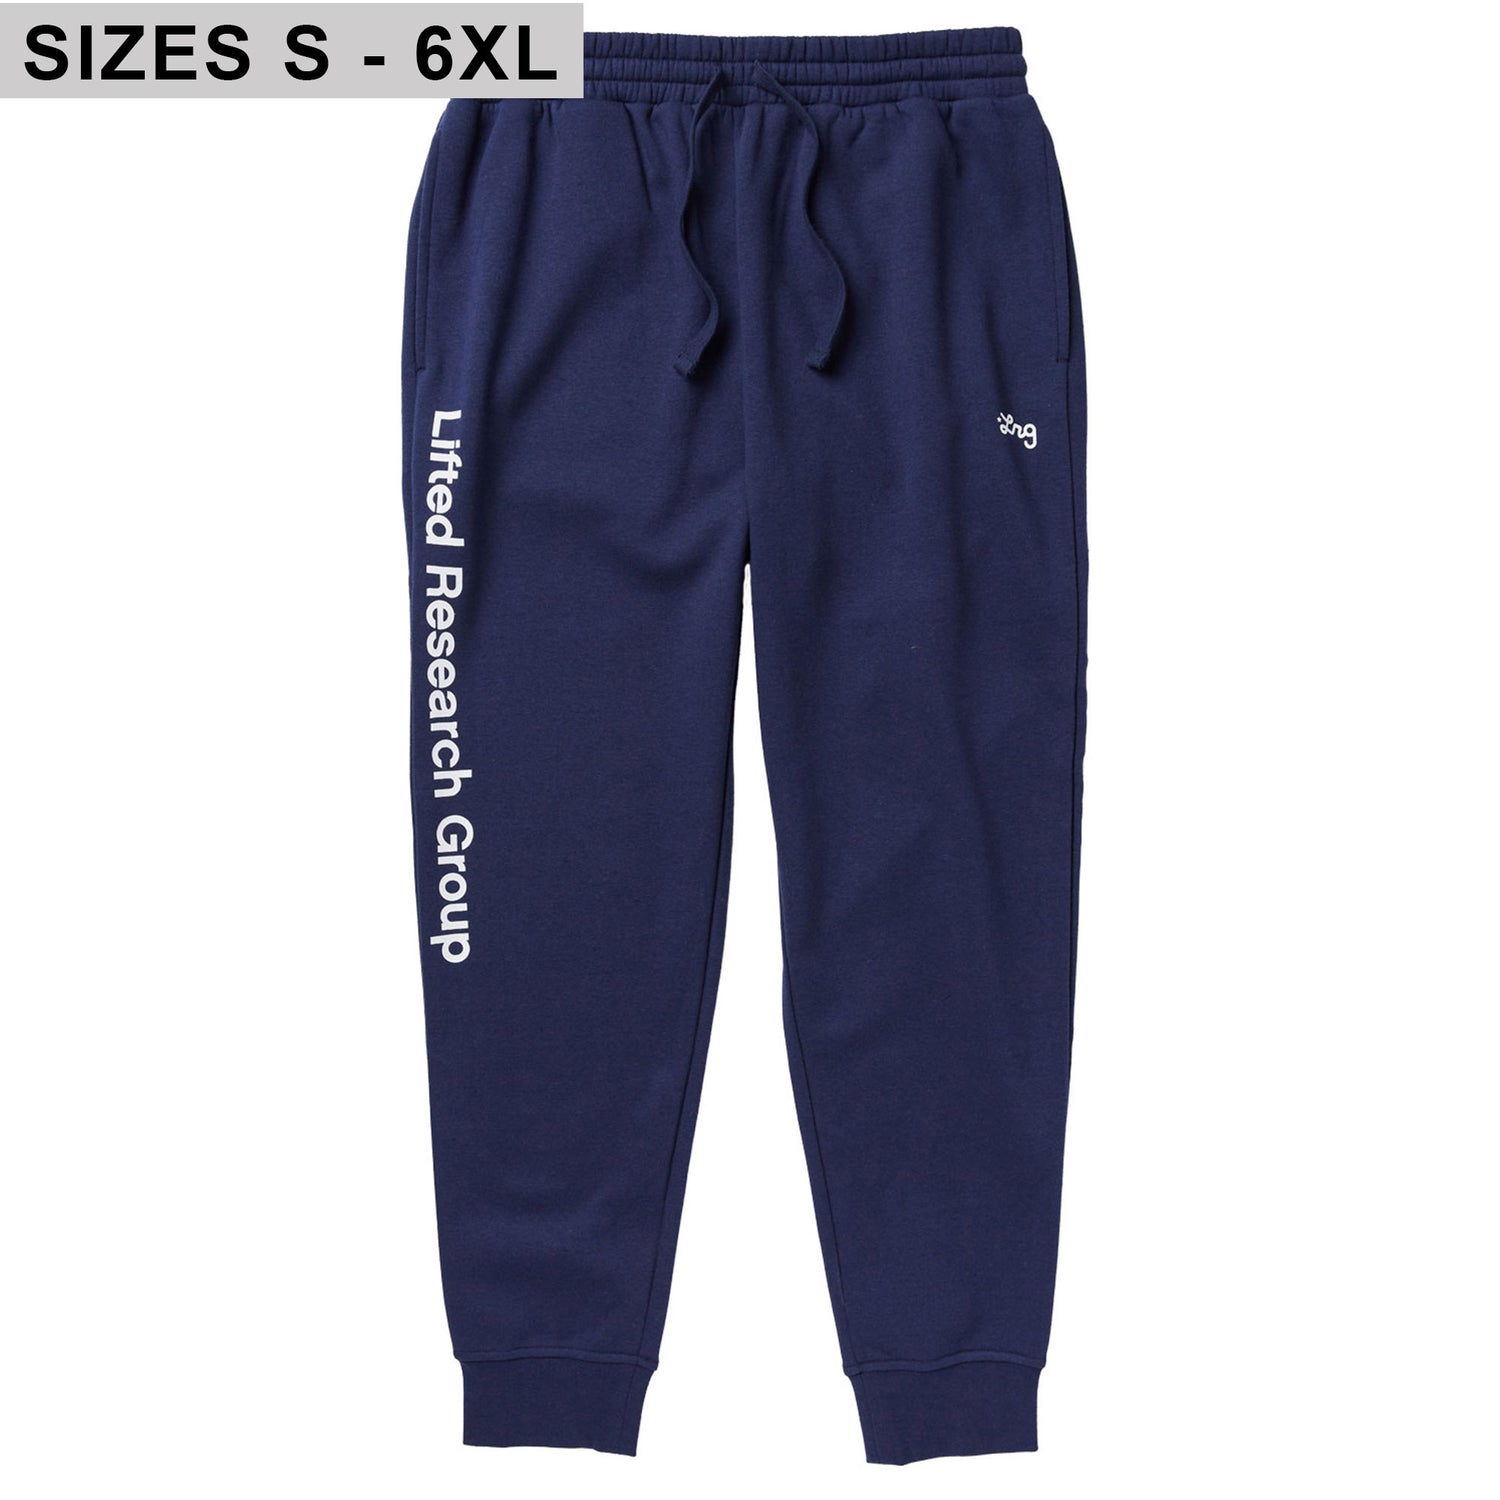 Men's VOS Sports Nylon Lined Sweatpants Jogger Track Pants NAVY SIZE:  XS,S,M,L